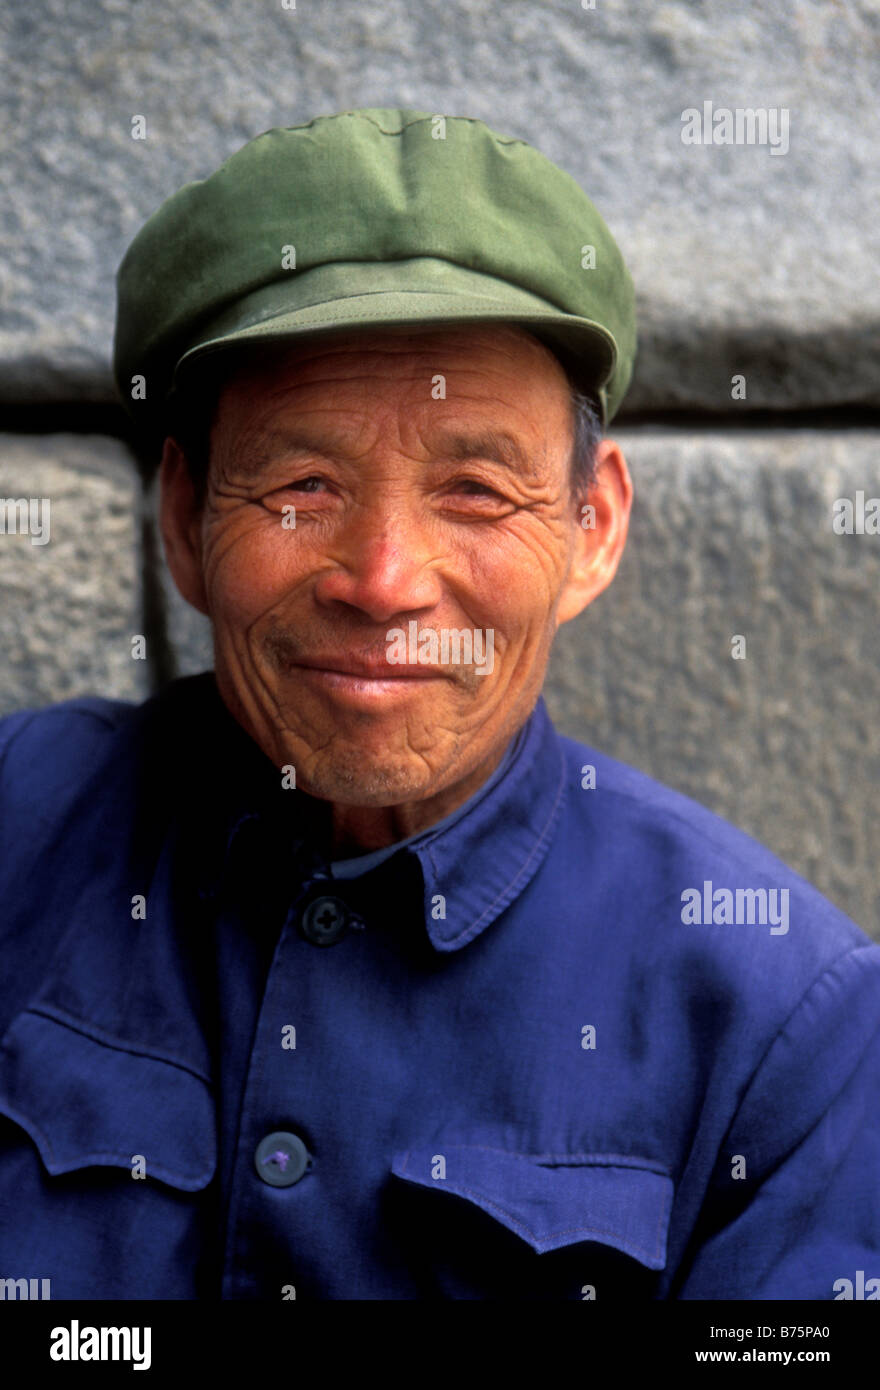 1, one, Chinese man, Chinese, man, adult man, old man, elderly man, eye contact, headshot, smiling, friendly, Xian, Shaanxi Province, China Stock Photo